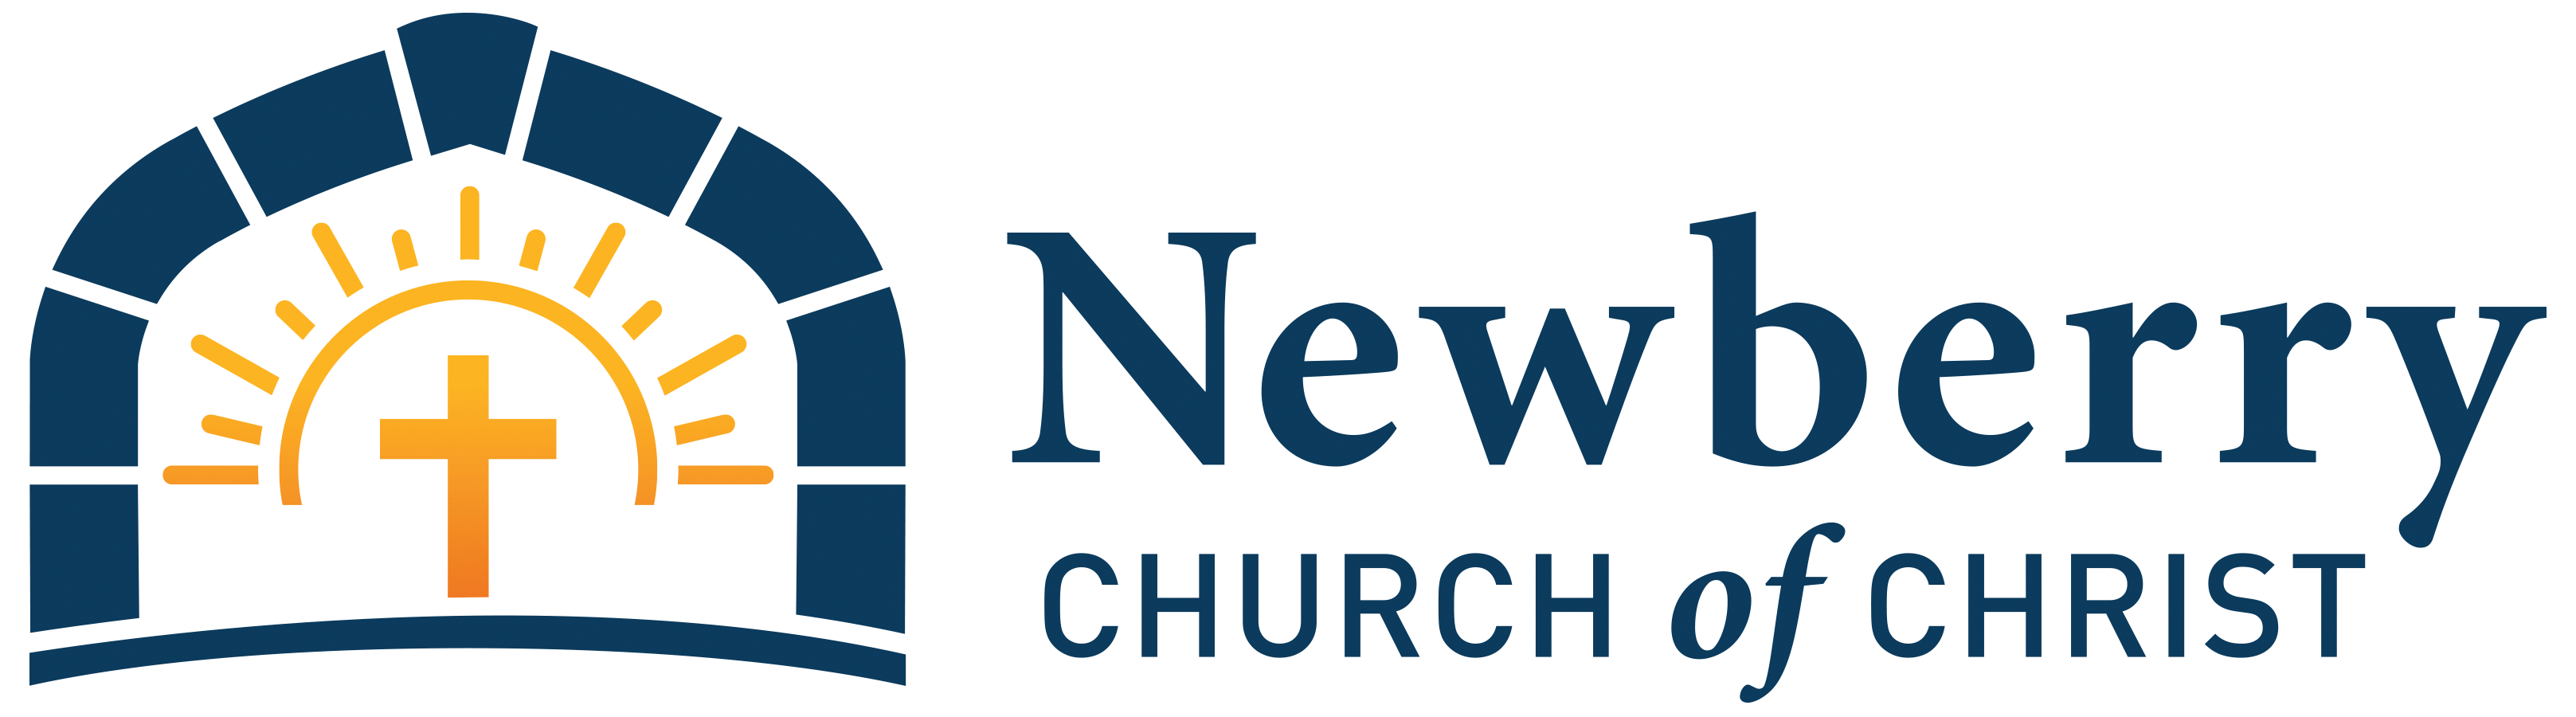 Newberry Church of Christ